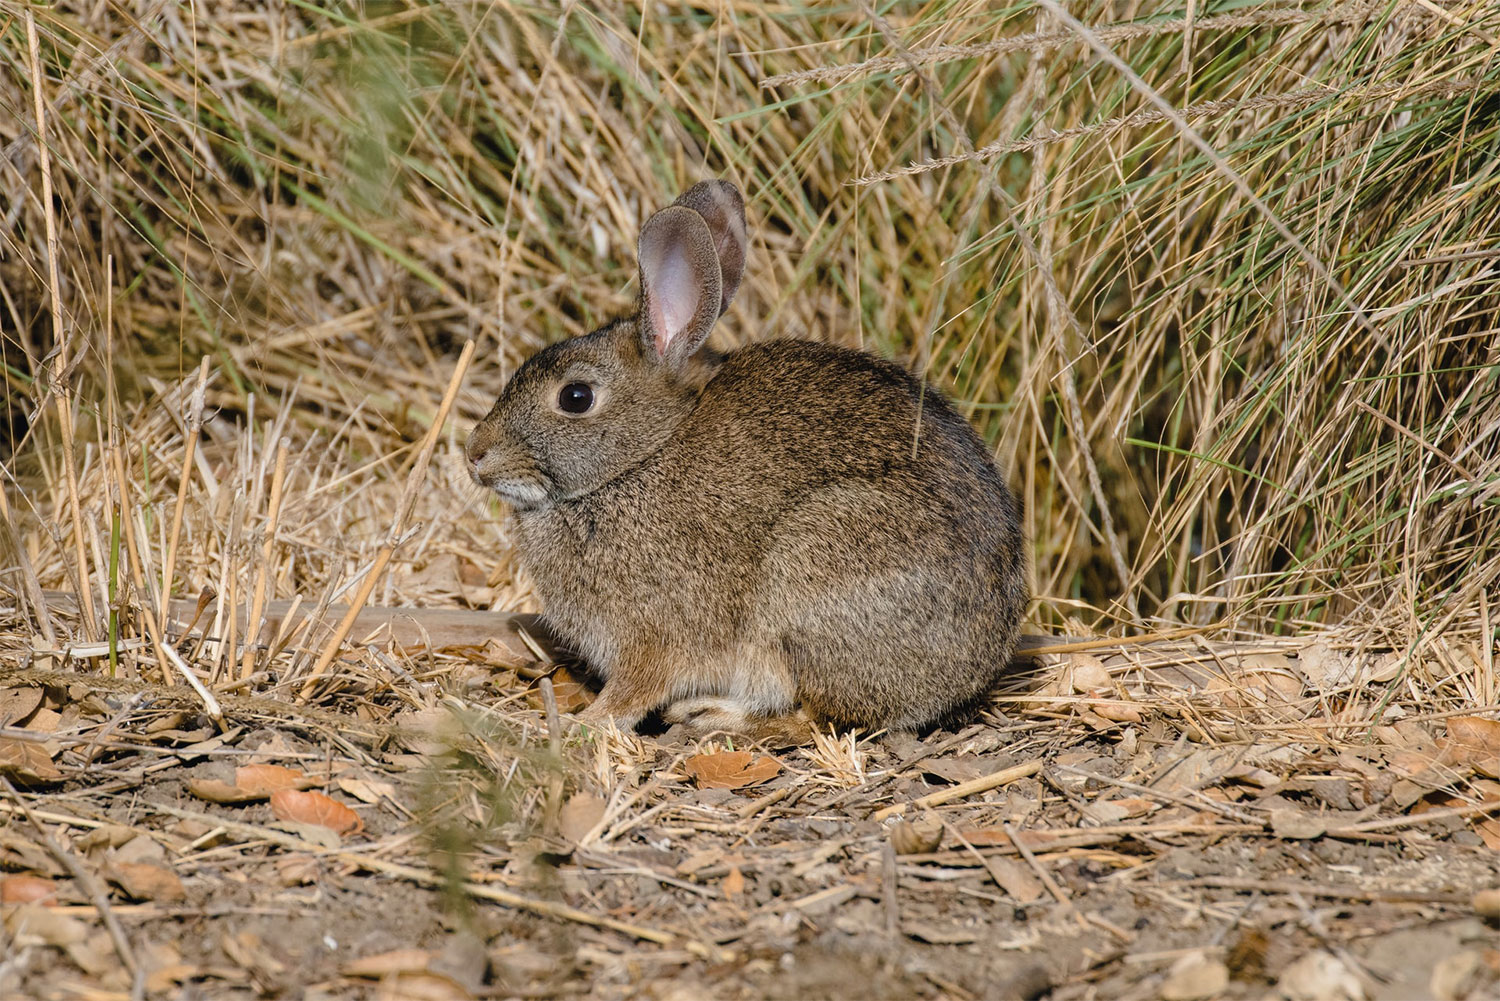 A rabbit sitting